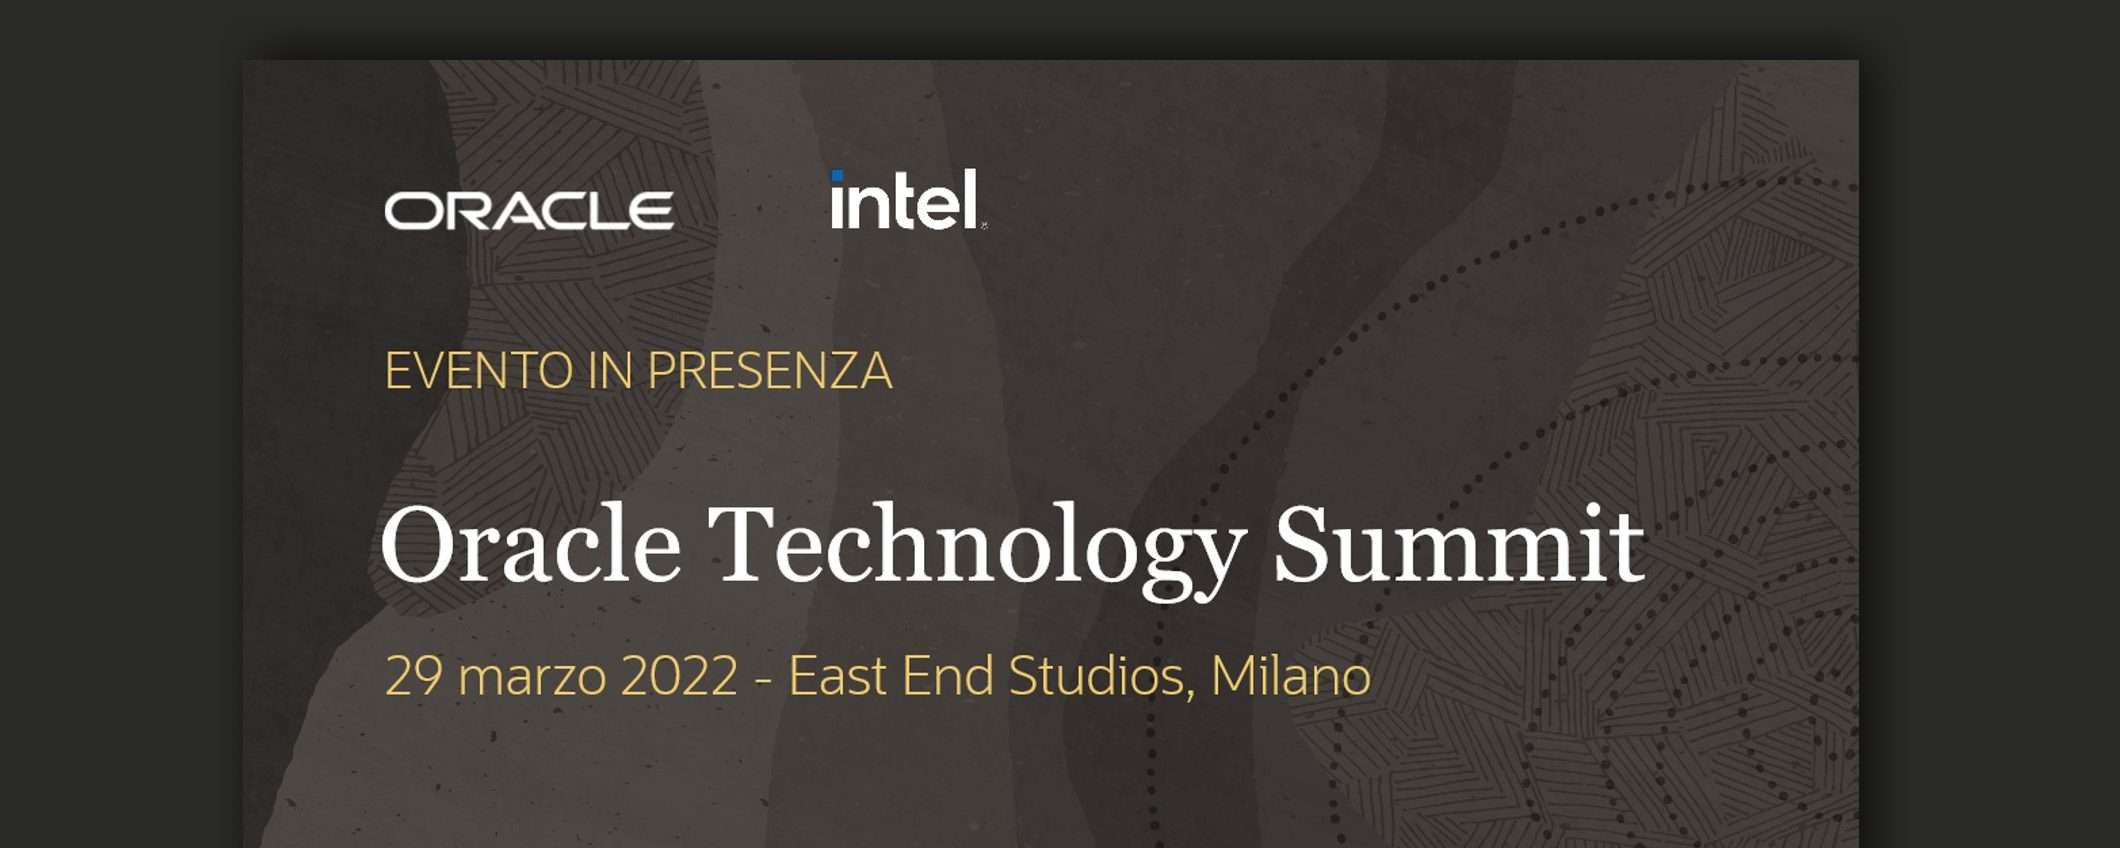 Oracle Technology Summit: 29 marzo, via alle iscrizioni